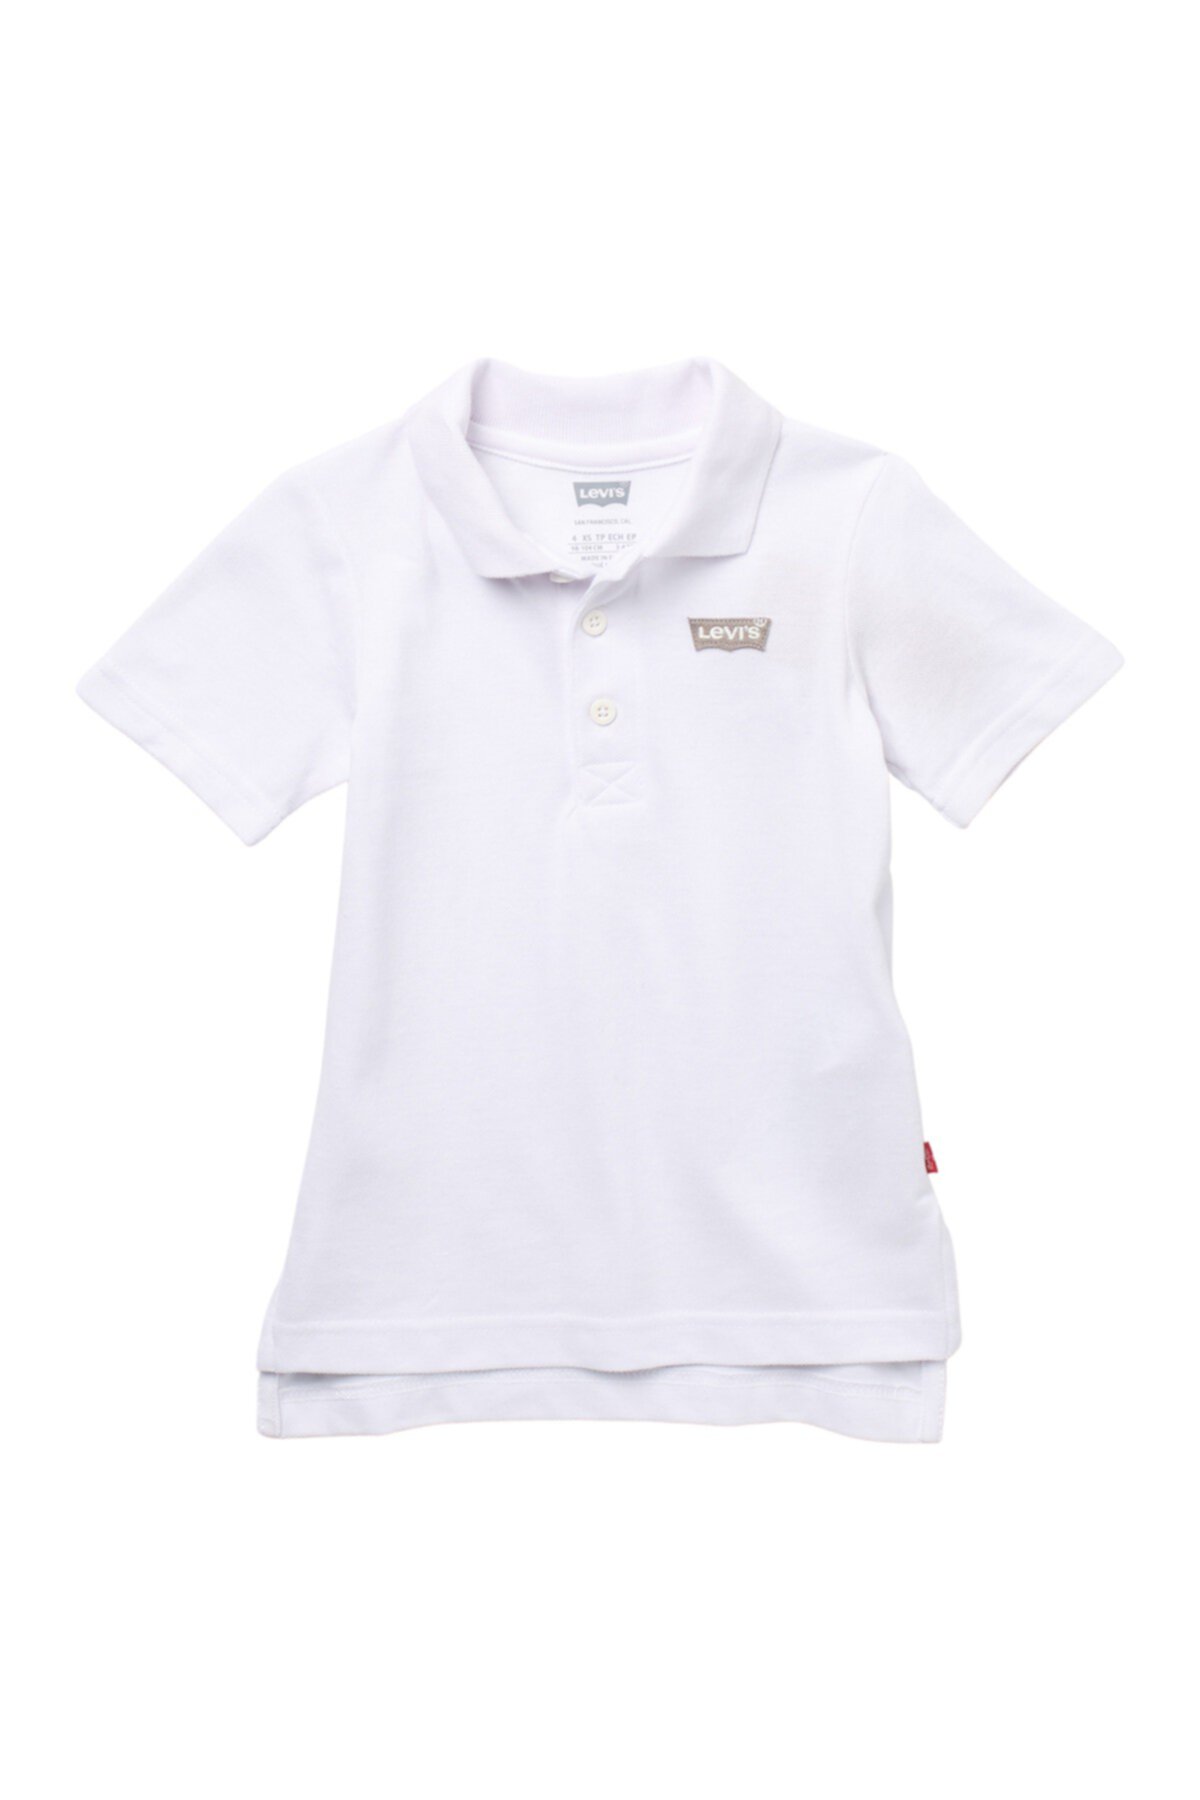 Logo Polo Shirt (Little Boys) Levi's®